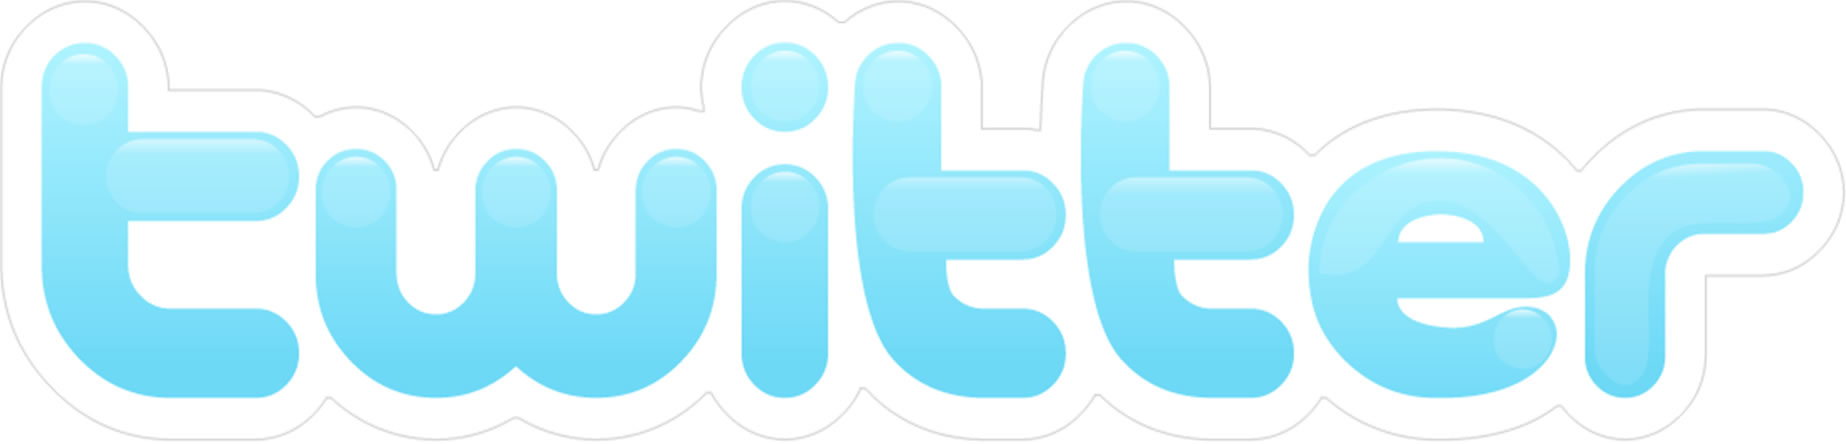 Facebook Twitter Logo High Res